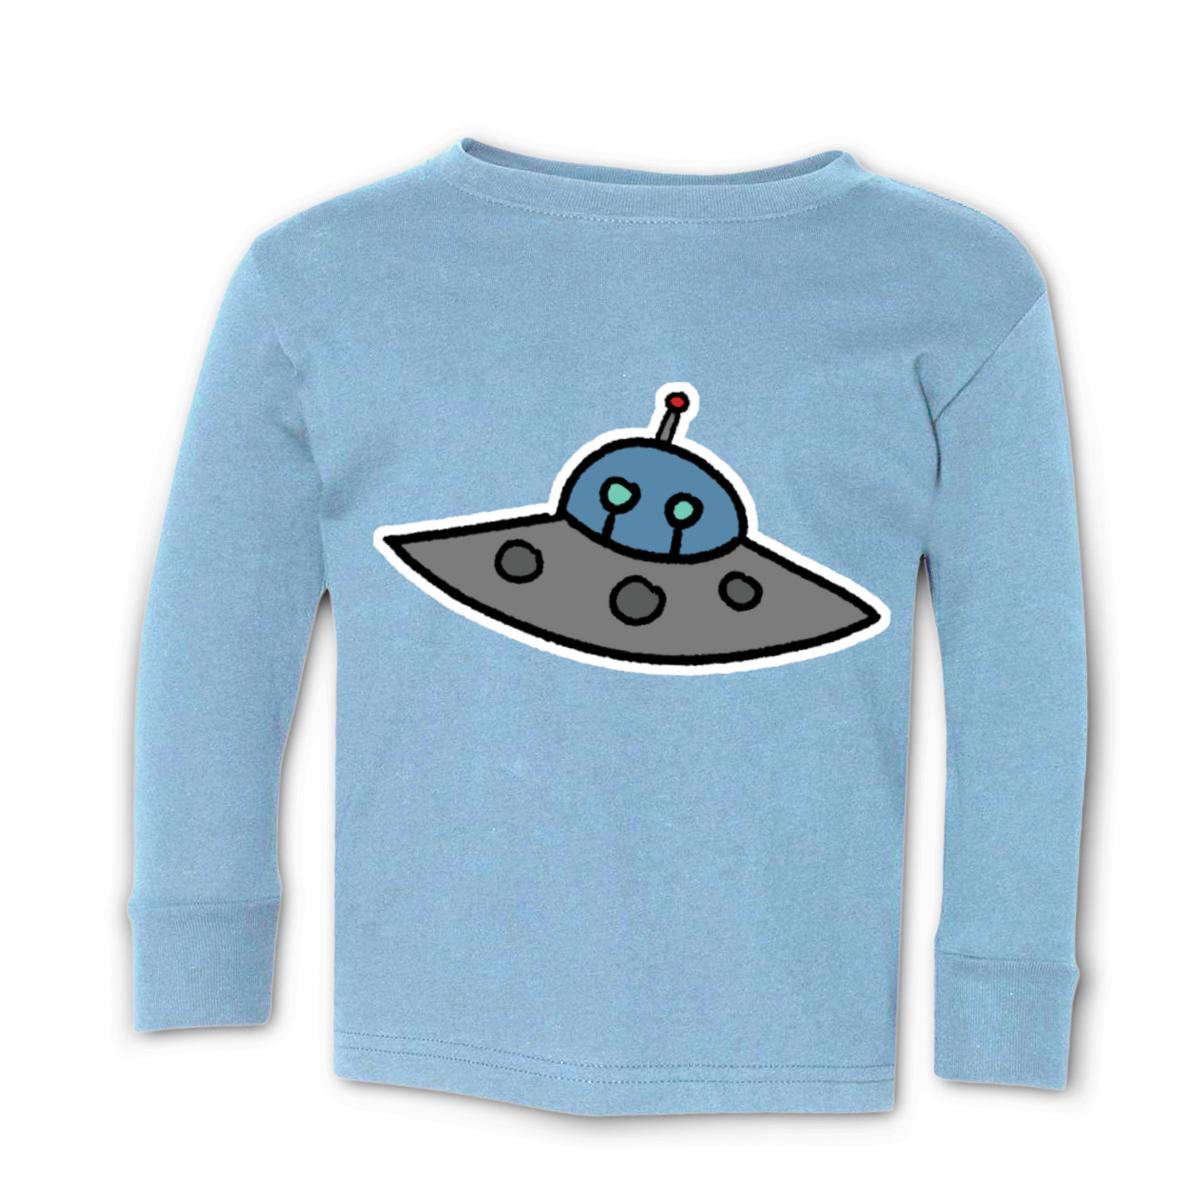 Flying Saucer Kid's Long Sleeve Tee Small light-blue